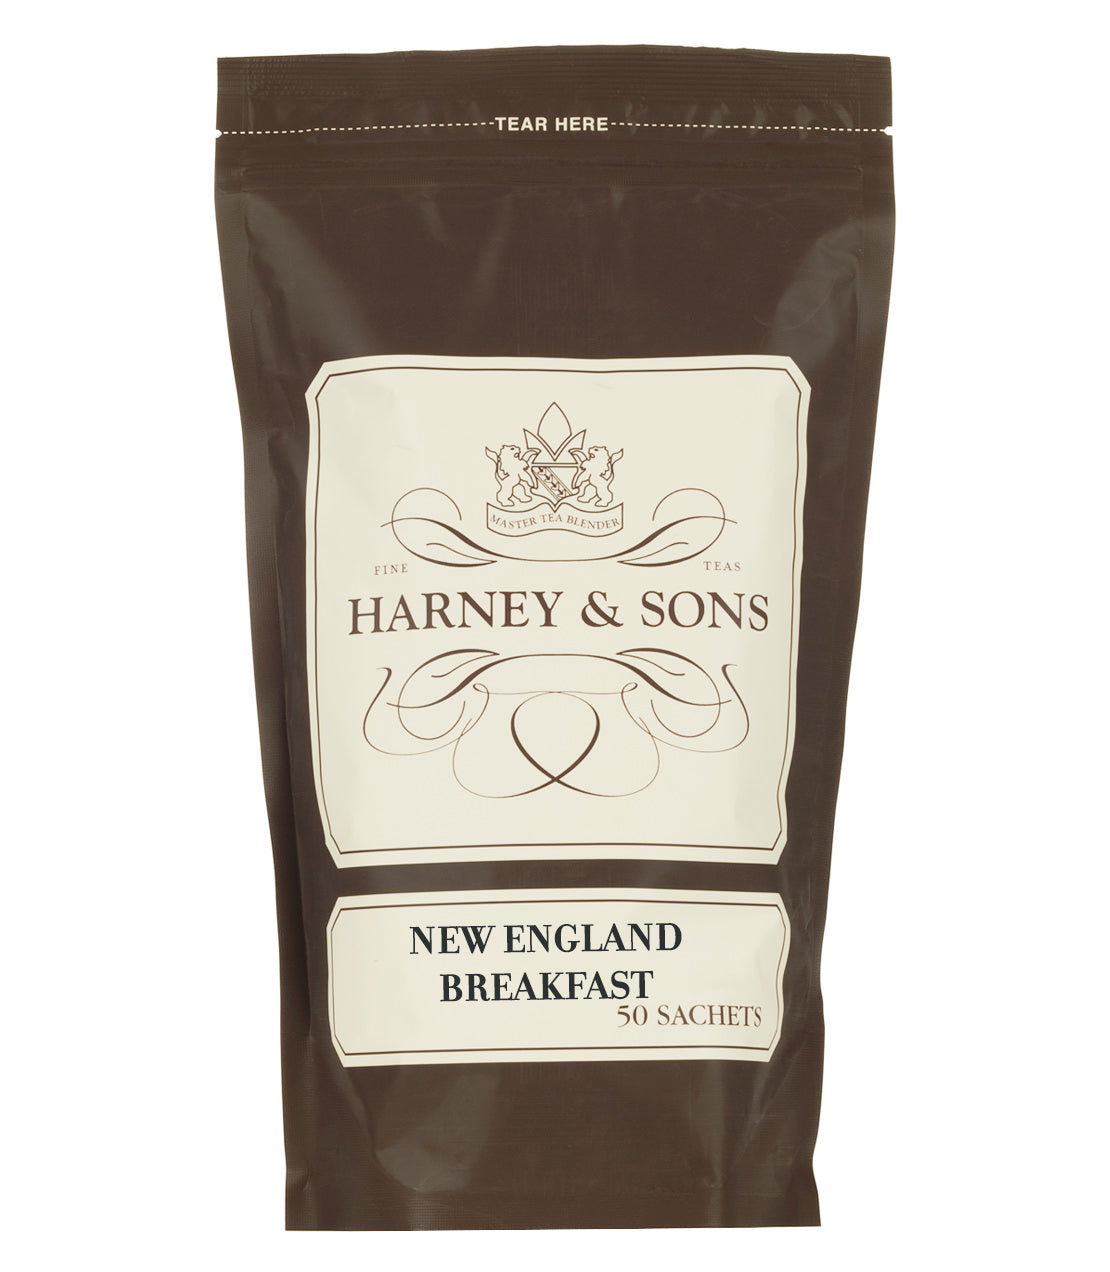 New England Breakfast - Sachets Bag of 50 Sachets - Harney & Sons Fine Teas